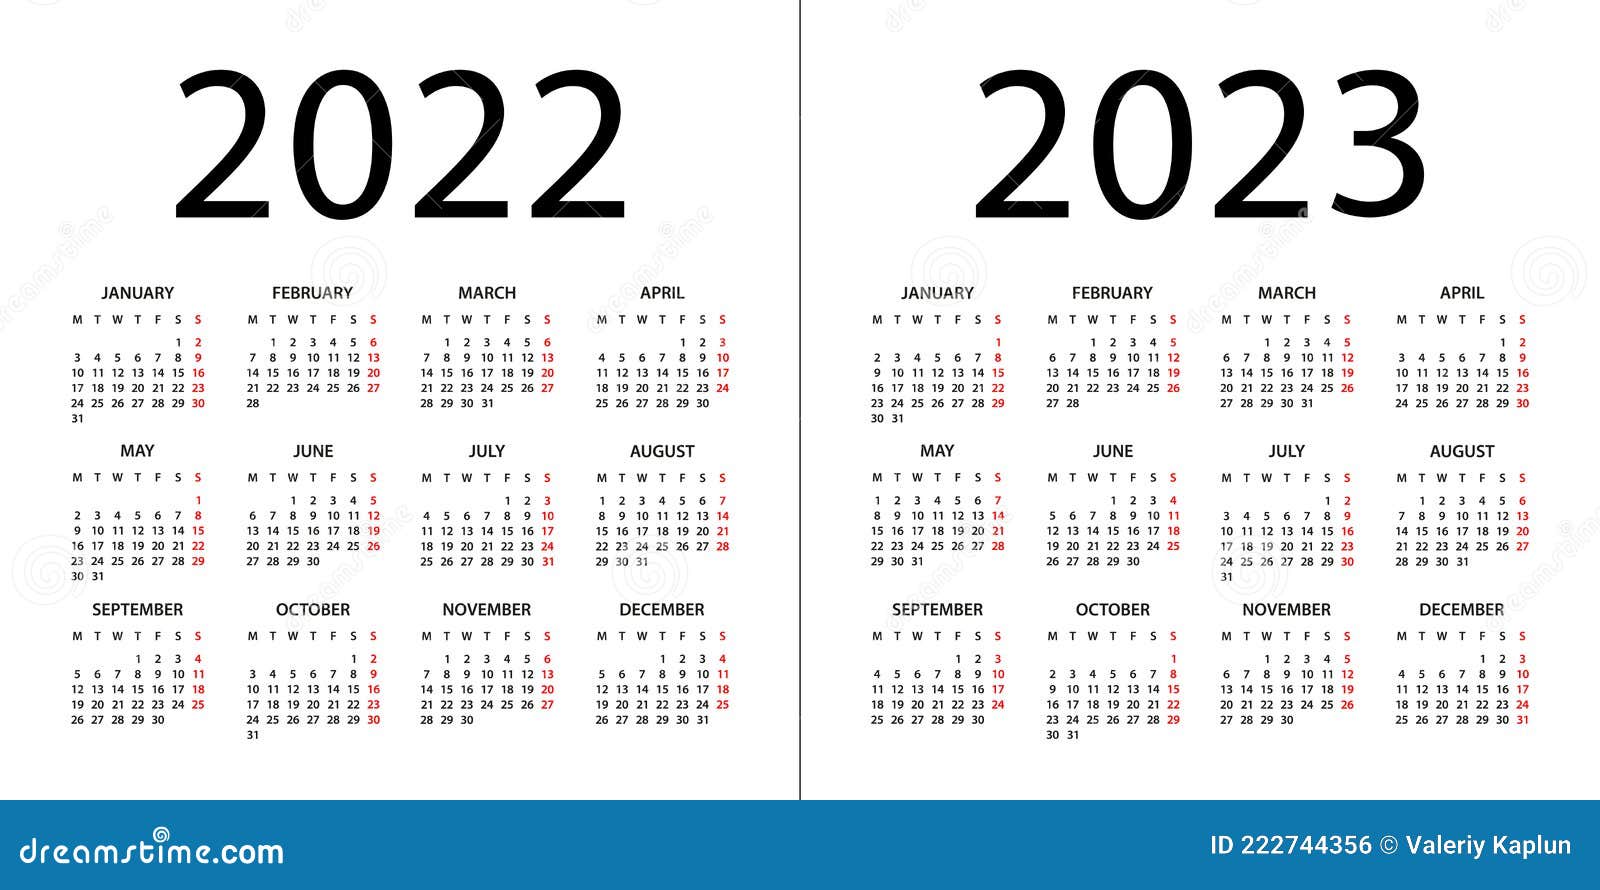 calendar-2022-2023-illustration-week-starts-on-monday-calendar-set